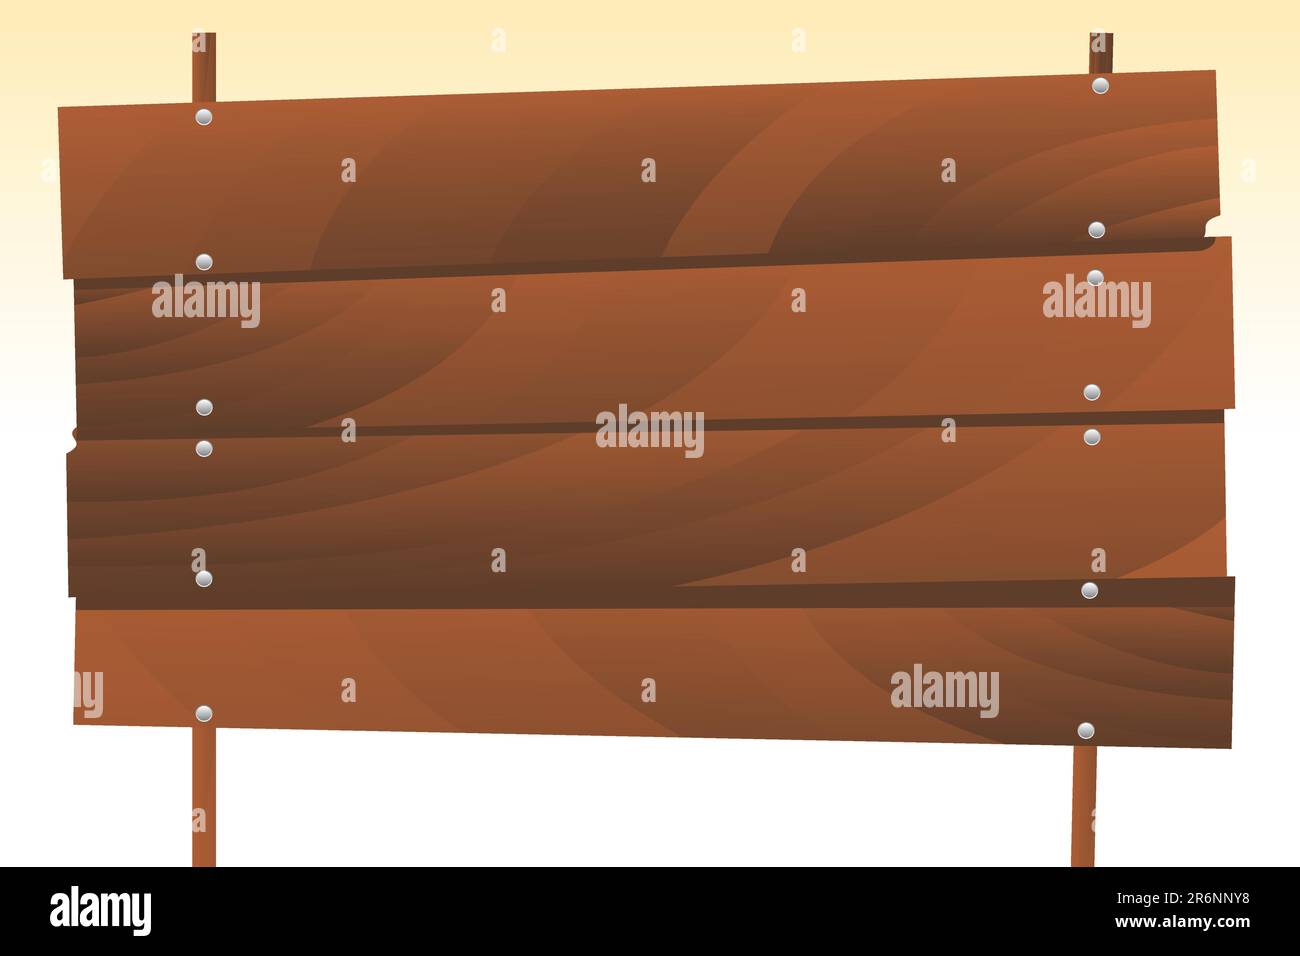 vector illustration of wooden signboard Stock Vector